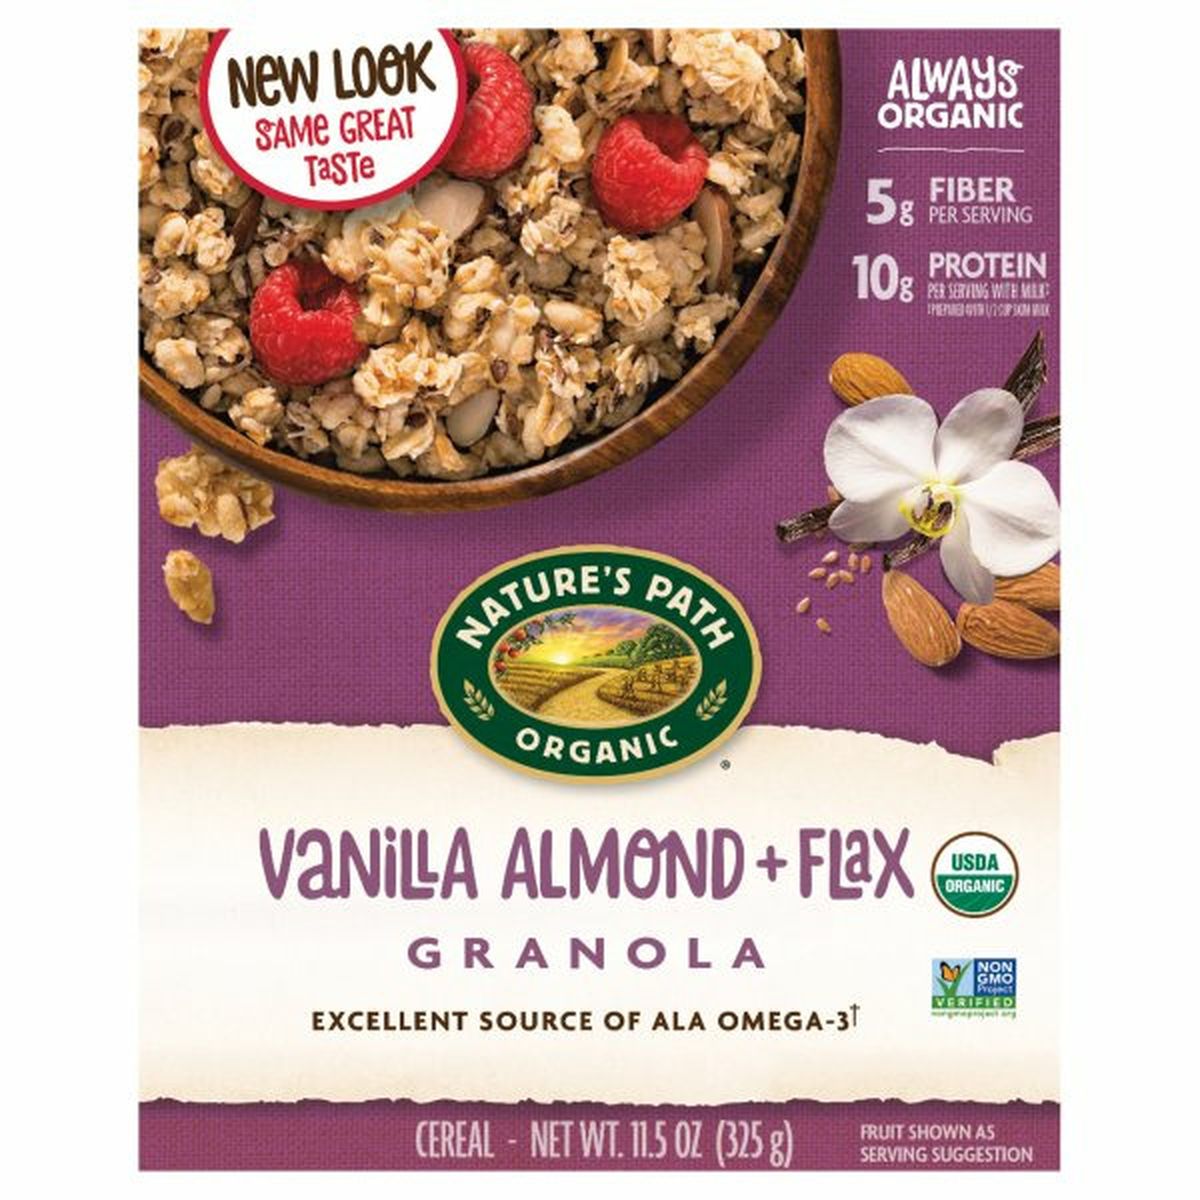 Calories in Nature's Path Cereal, Vanilla Almond + Flax, Granola